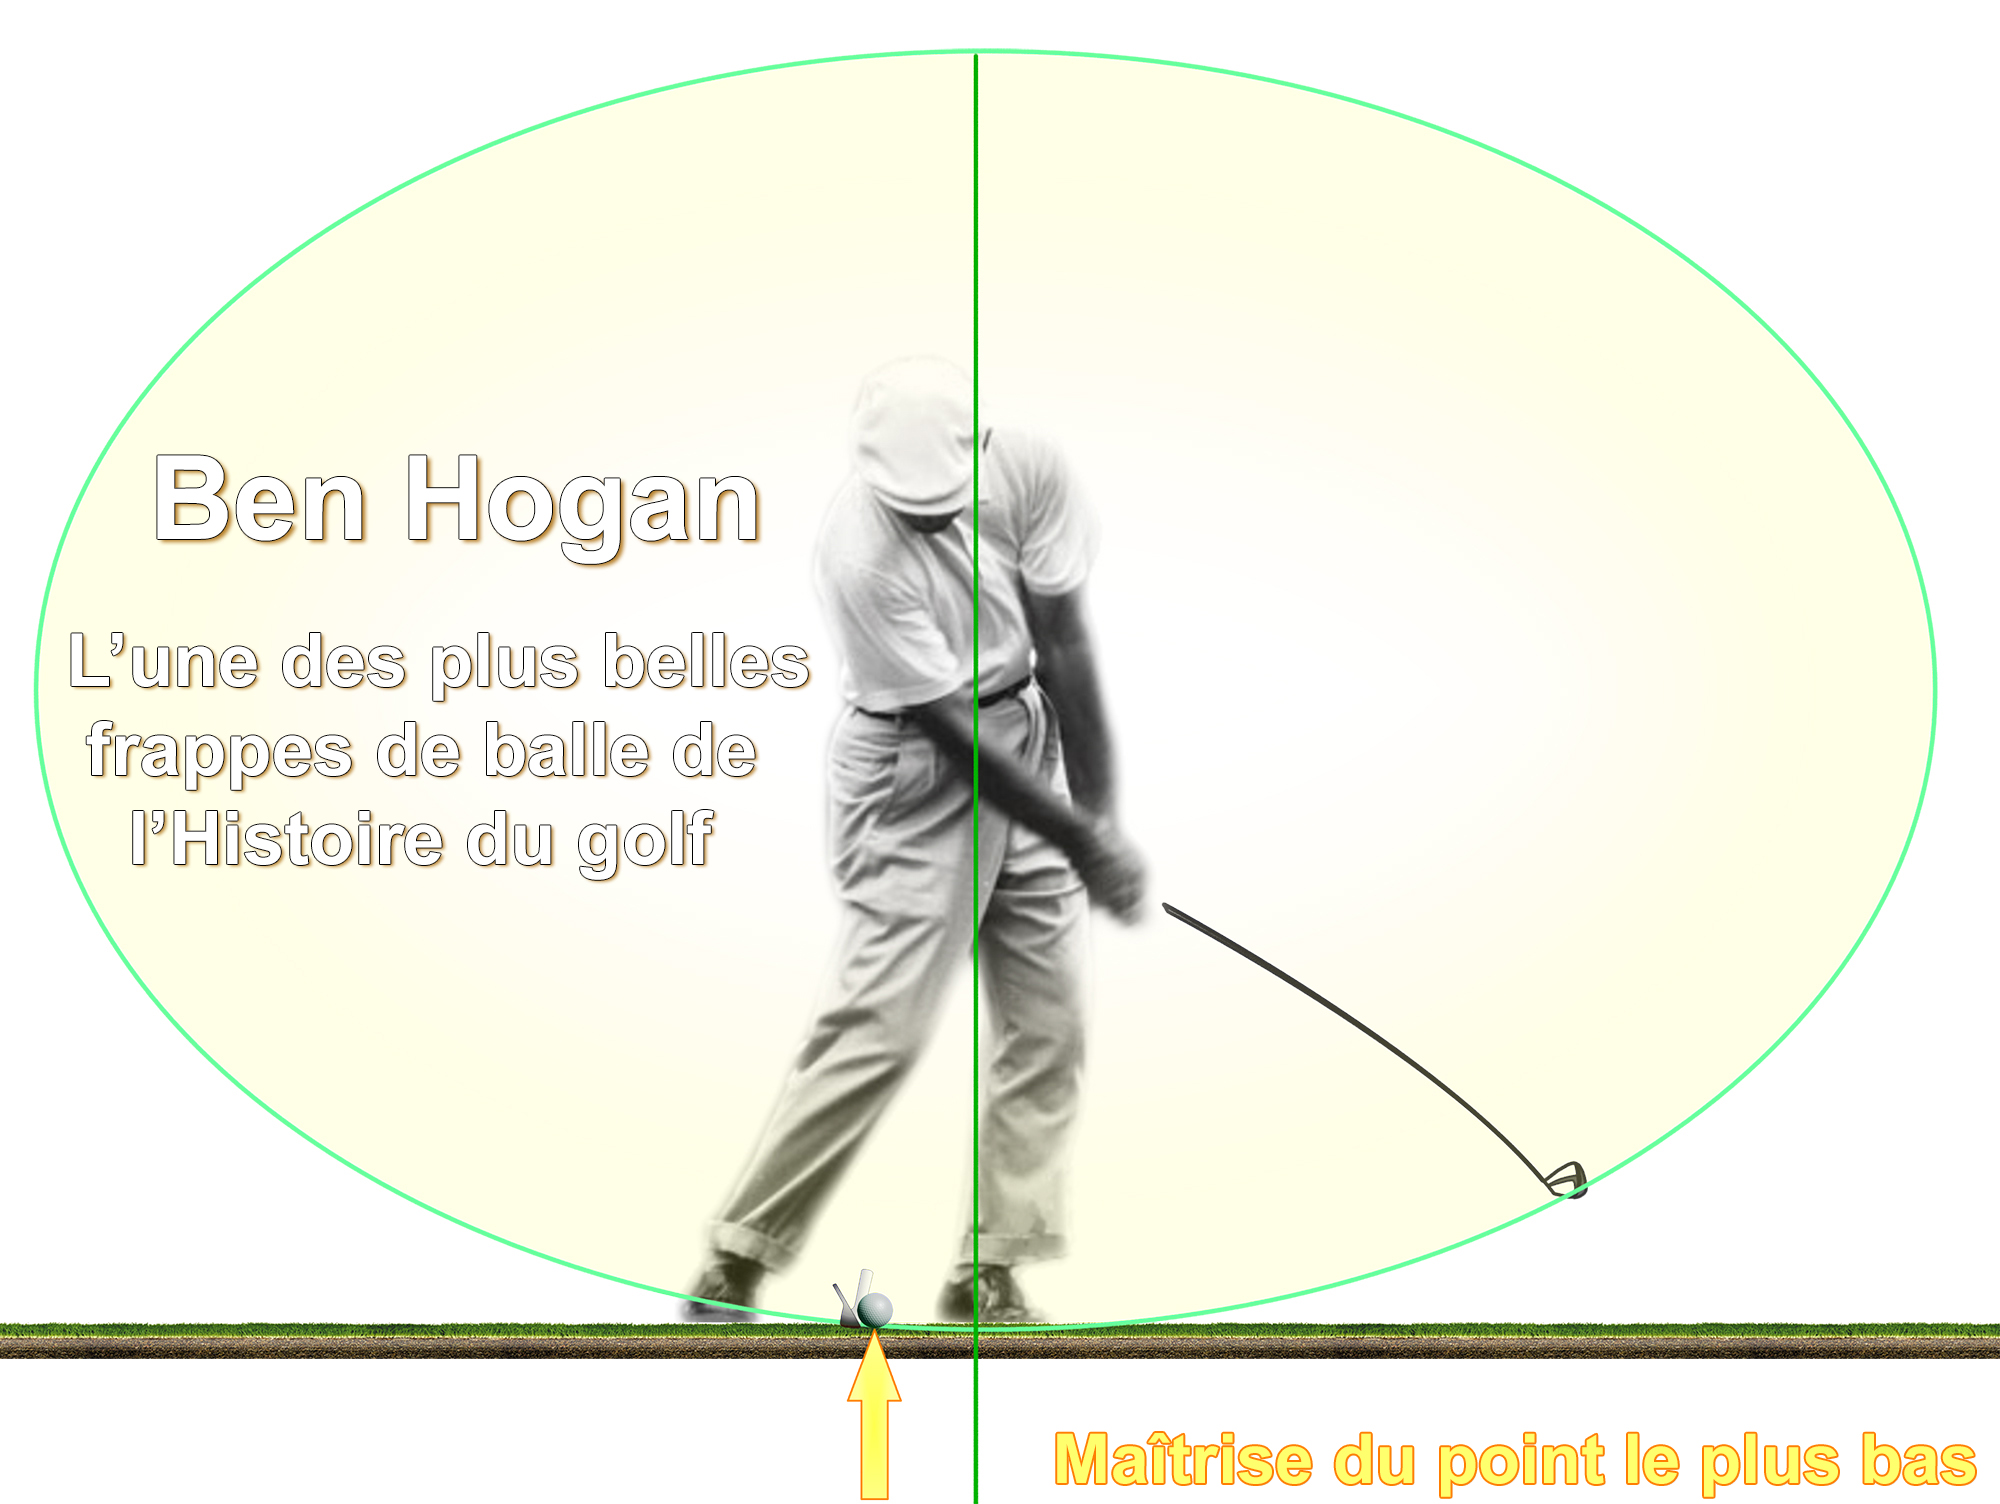 Le swing de Ben Hogan